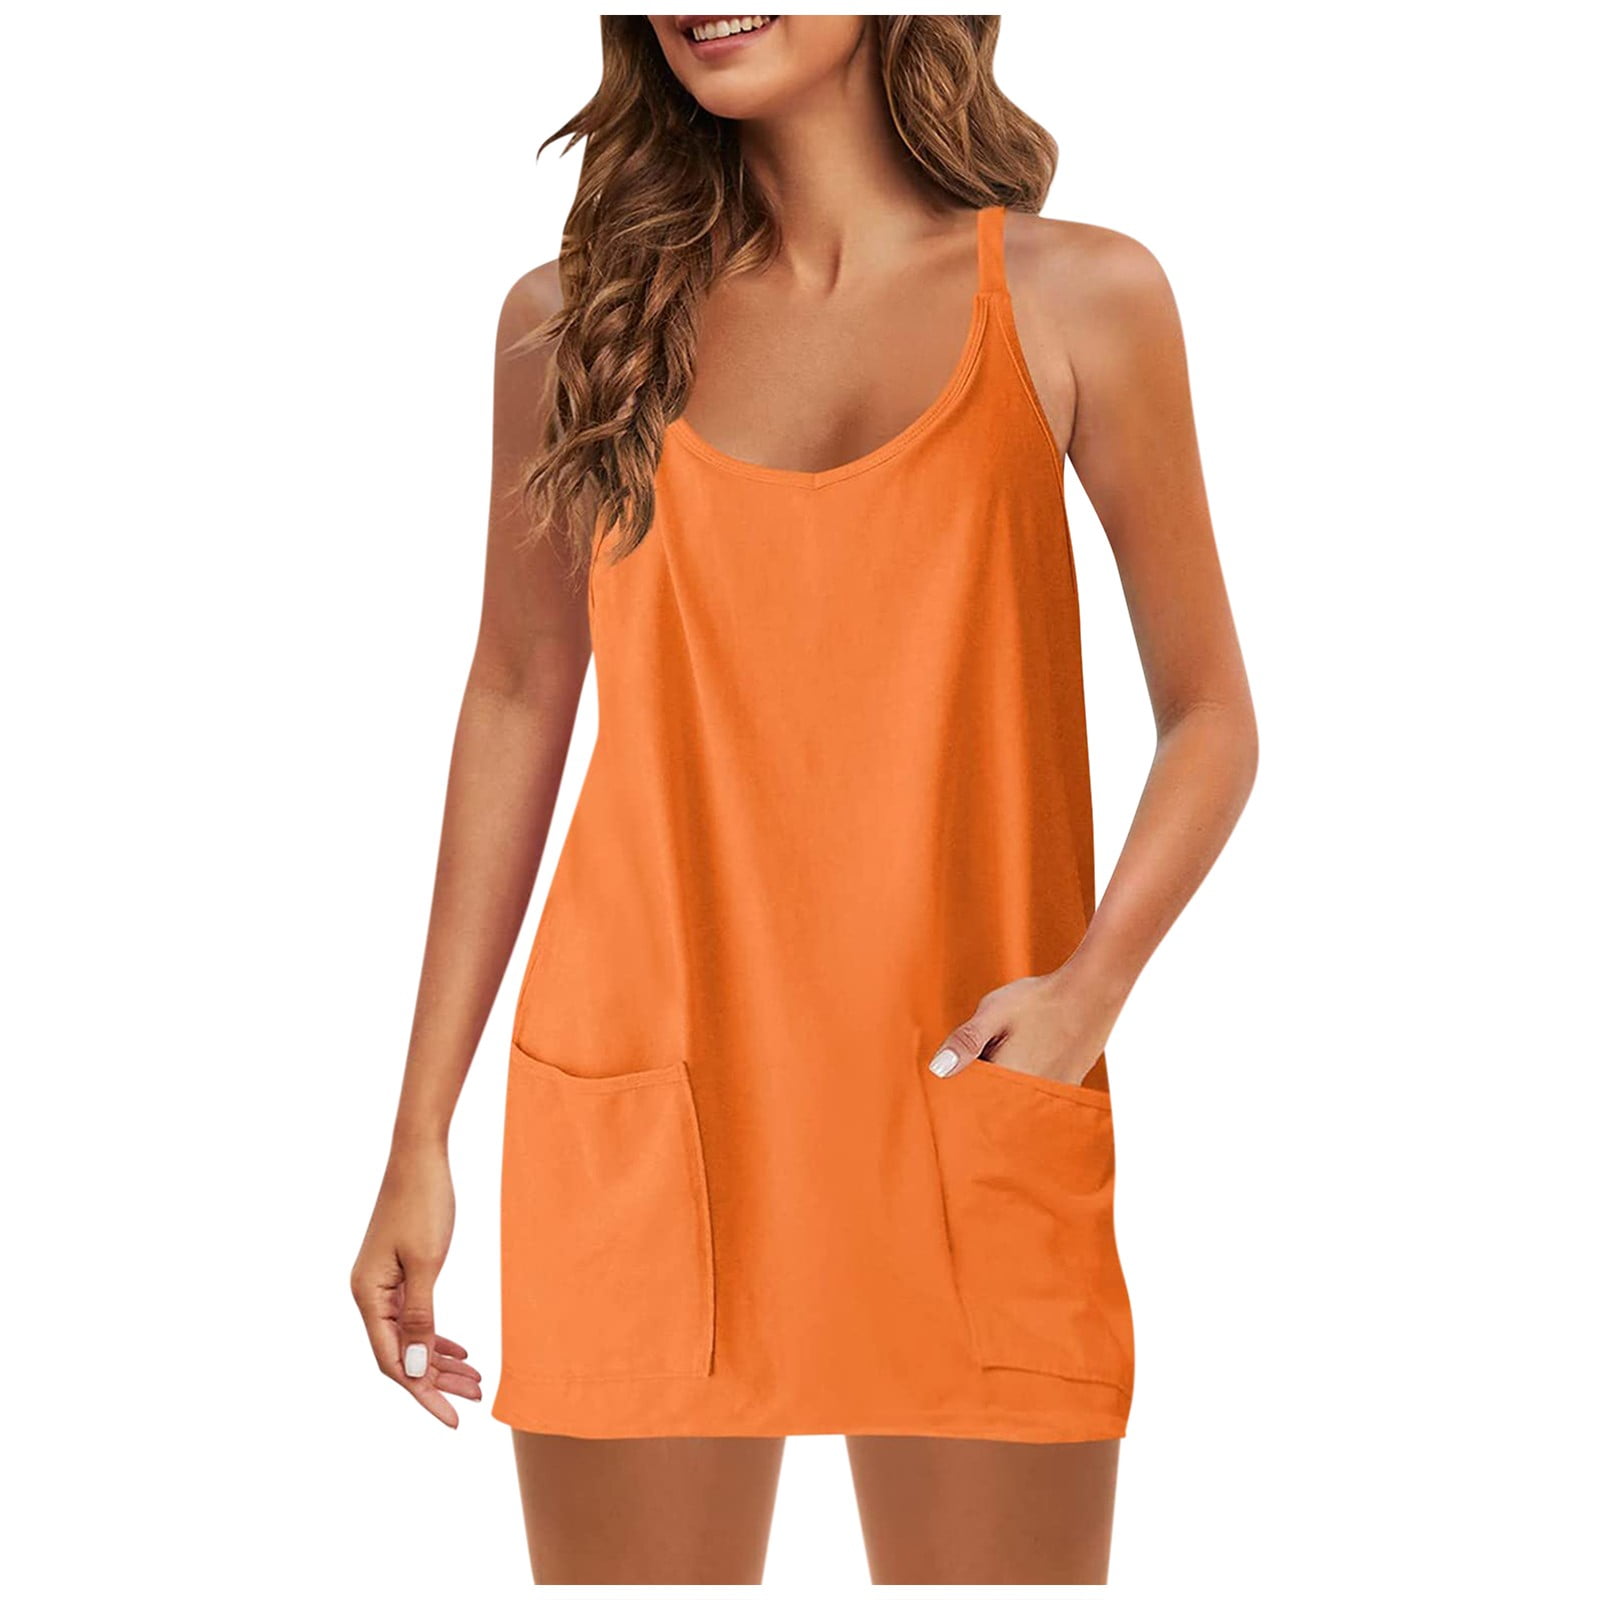 TQWQT Womens Summer Sleeveless Mini Dress V Neck Spaghetti Strap Sundress  Athletic Short Dress with Pockets Orange L 